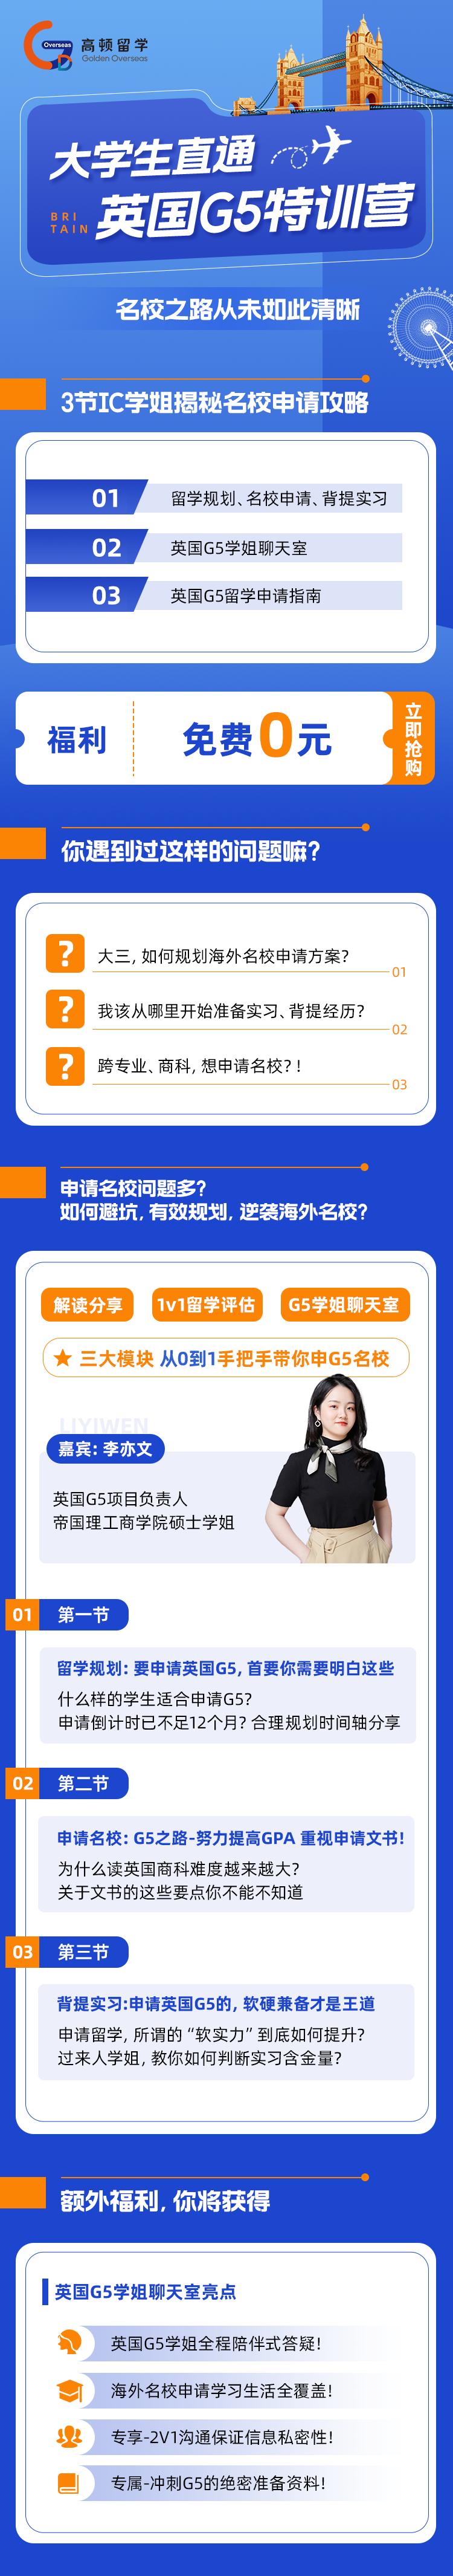 https://simg01.gaodunwangxiao.com/uploadfiles/product-center/202401/22/d7d21_20240122173958.png